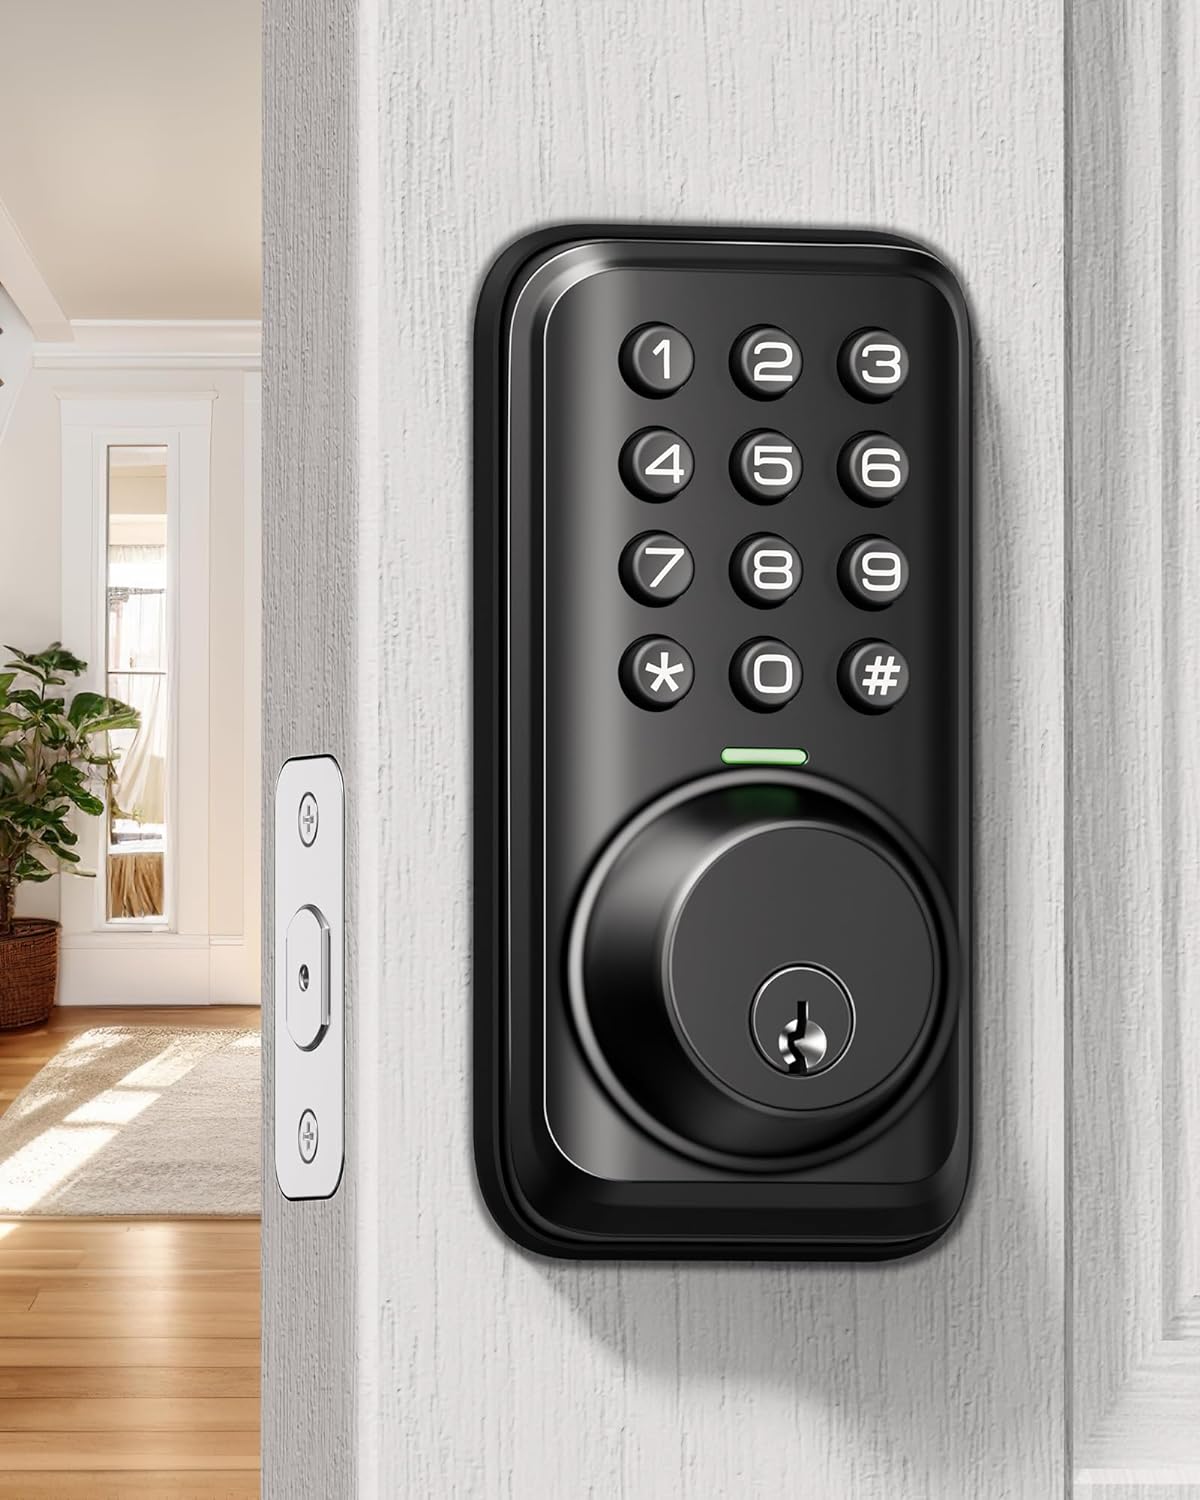 Veise ZS01 Keyless Entry Door Lock, Electronic Keypad Deadbolt Lock, Auto Lock, 1 Touch Locking & 20 User Codes, Anti-Peeking Password, Easy Installation Design